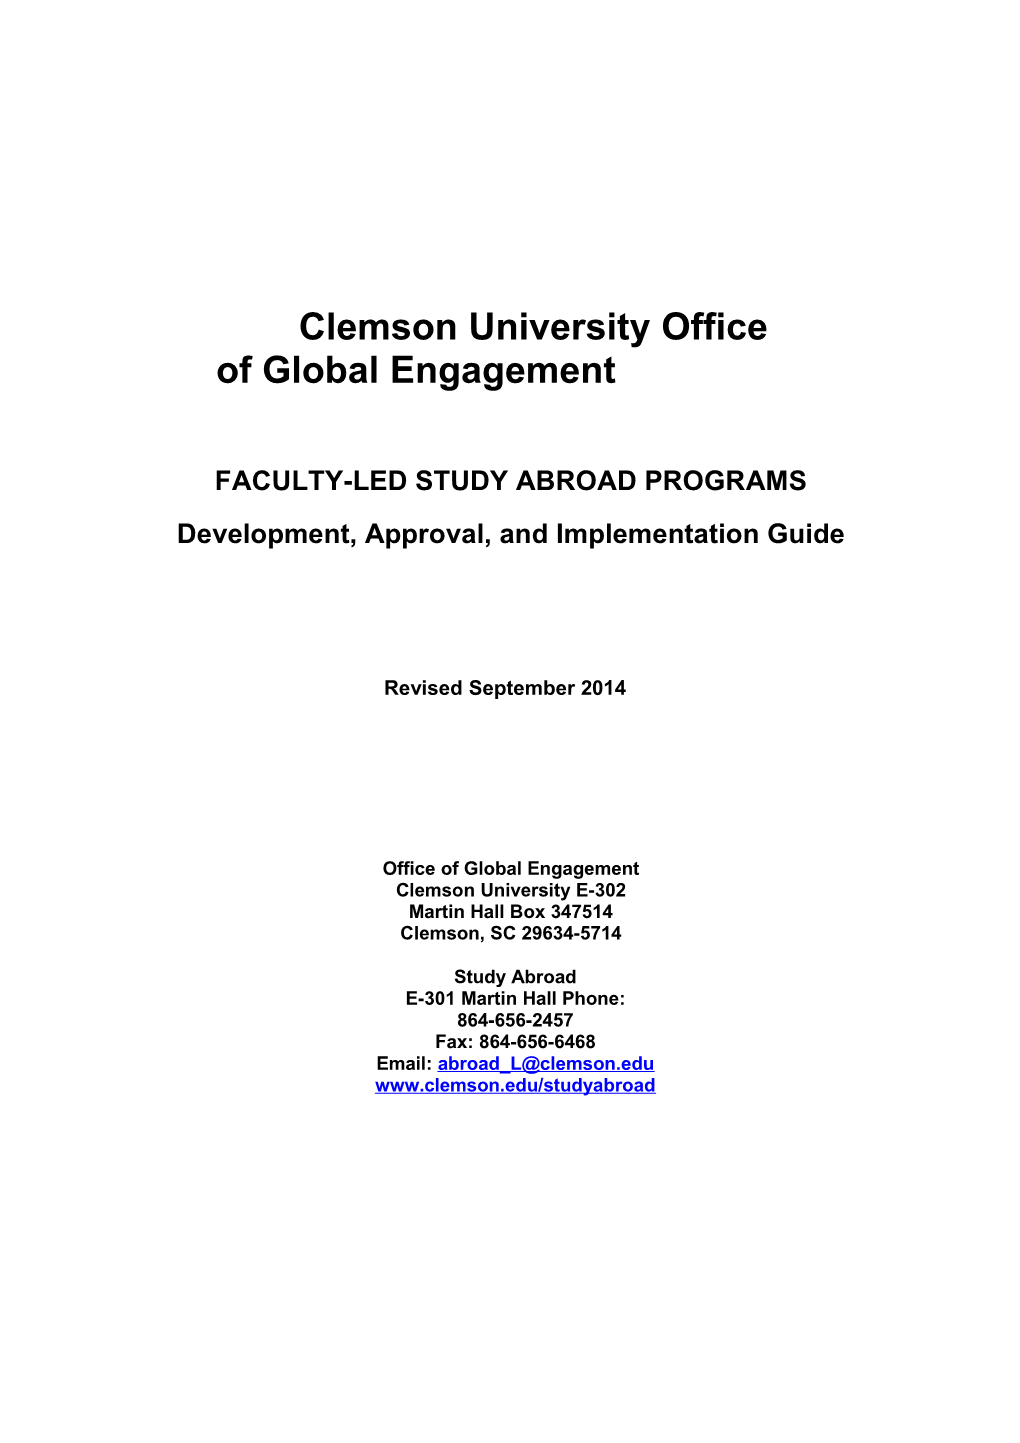 Clemson University Office of Global Engagement